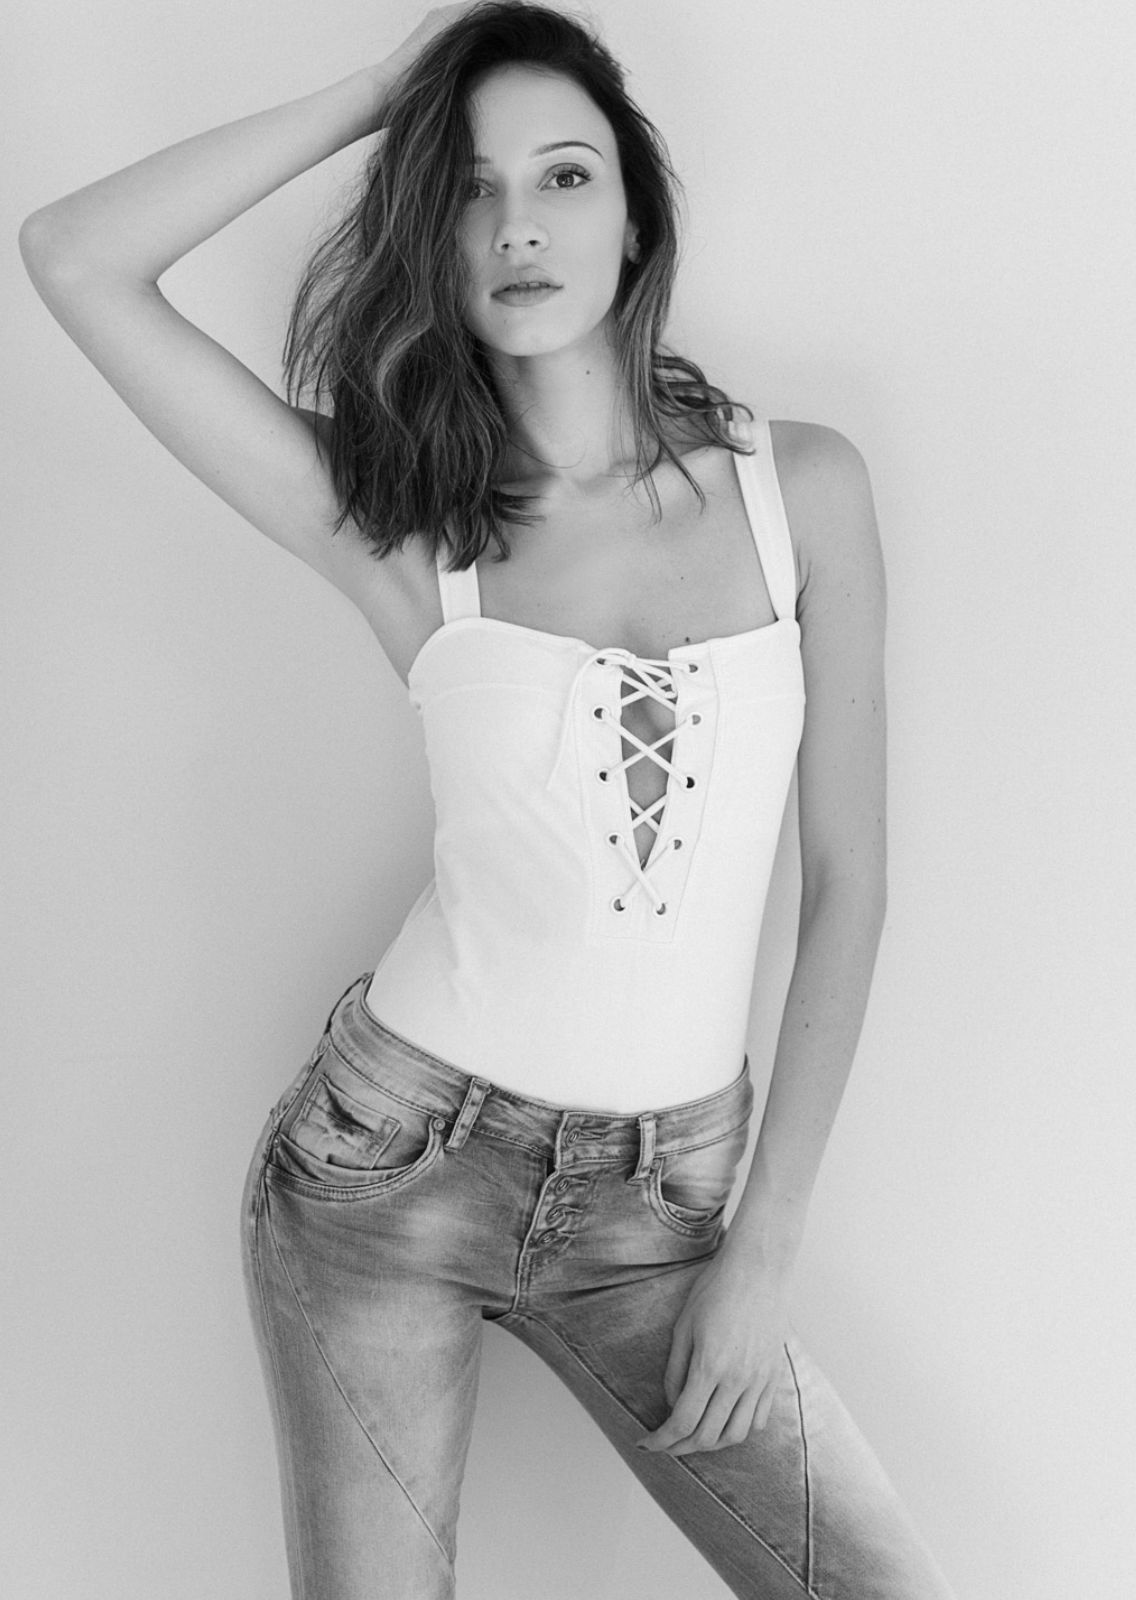 LYUBA RUMENOVA. Carmen Duran Model Agency.